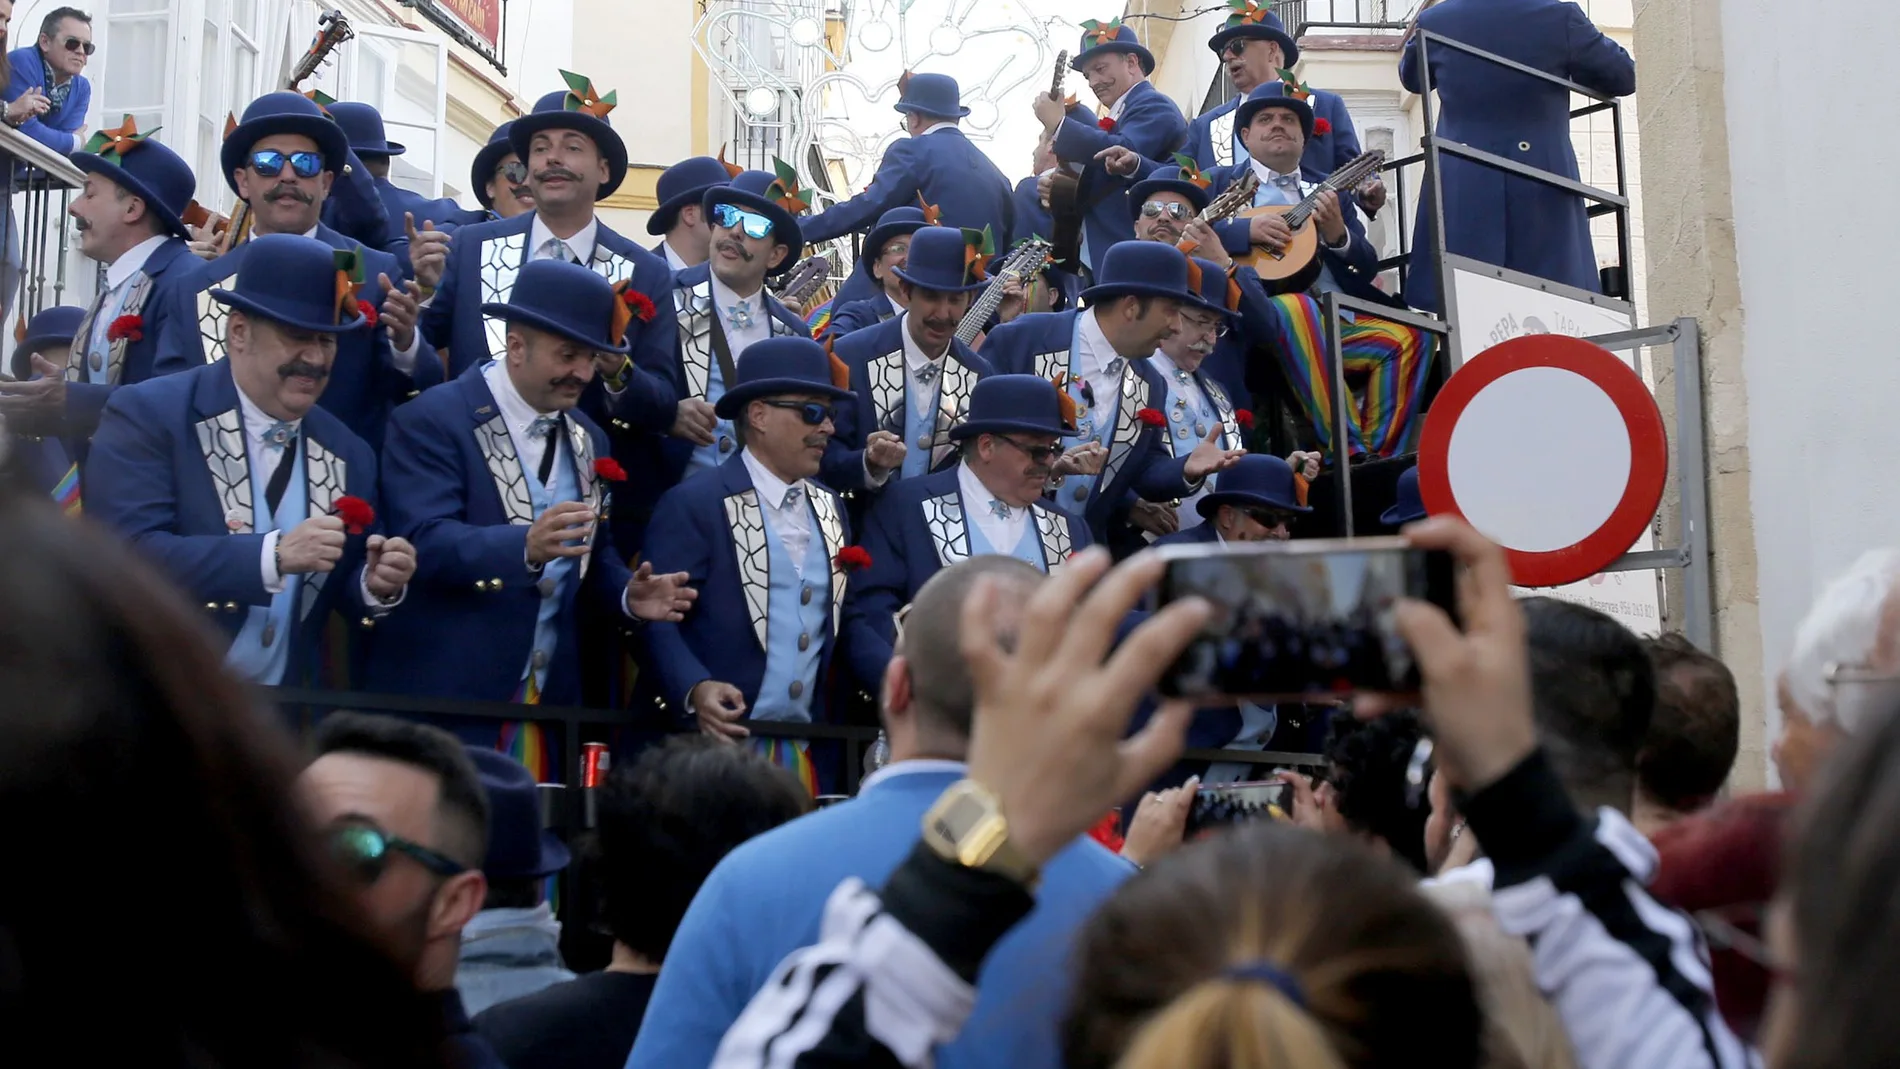 Carrusel de coros del Carnaval de Cádiz